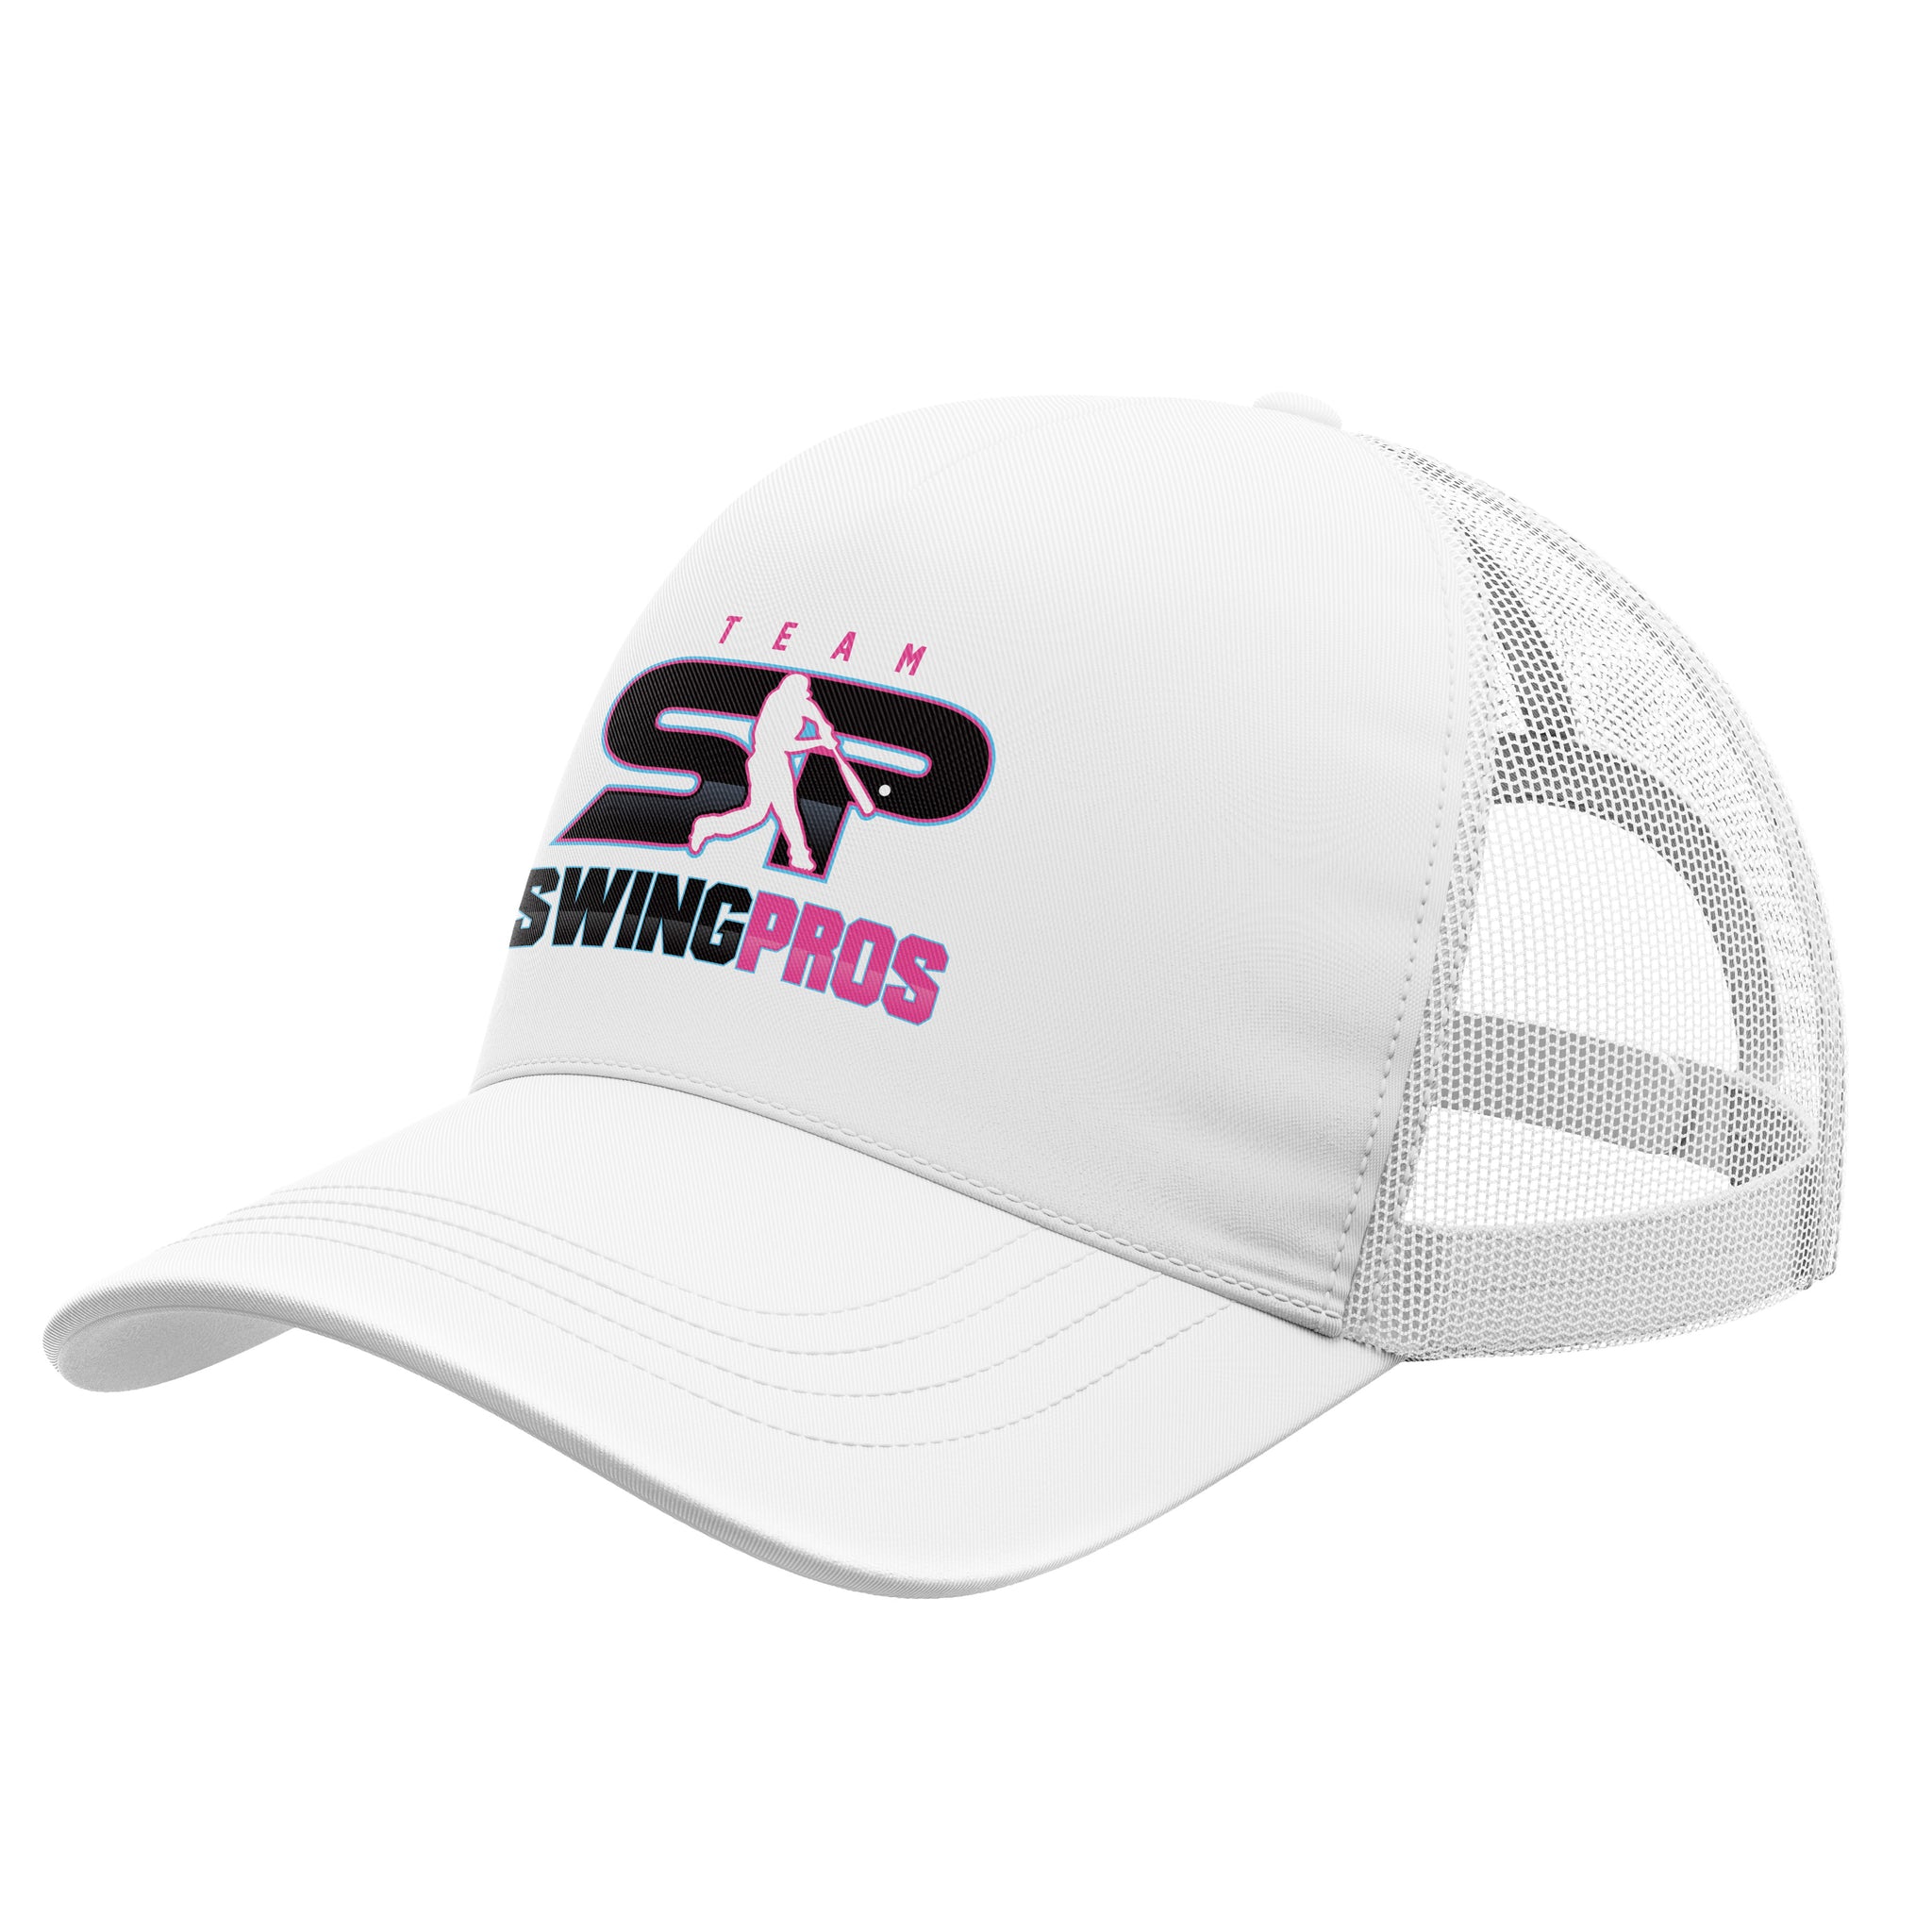 TEAM SWING PROS 1.0 112 SNAPBACK HAT